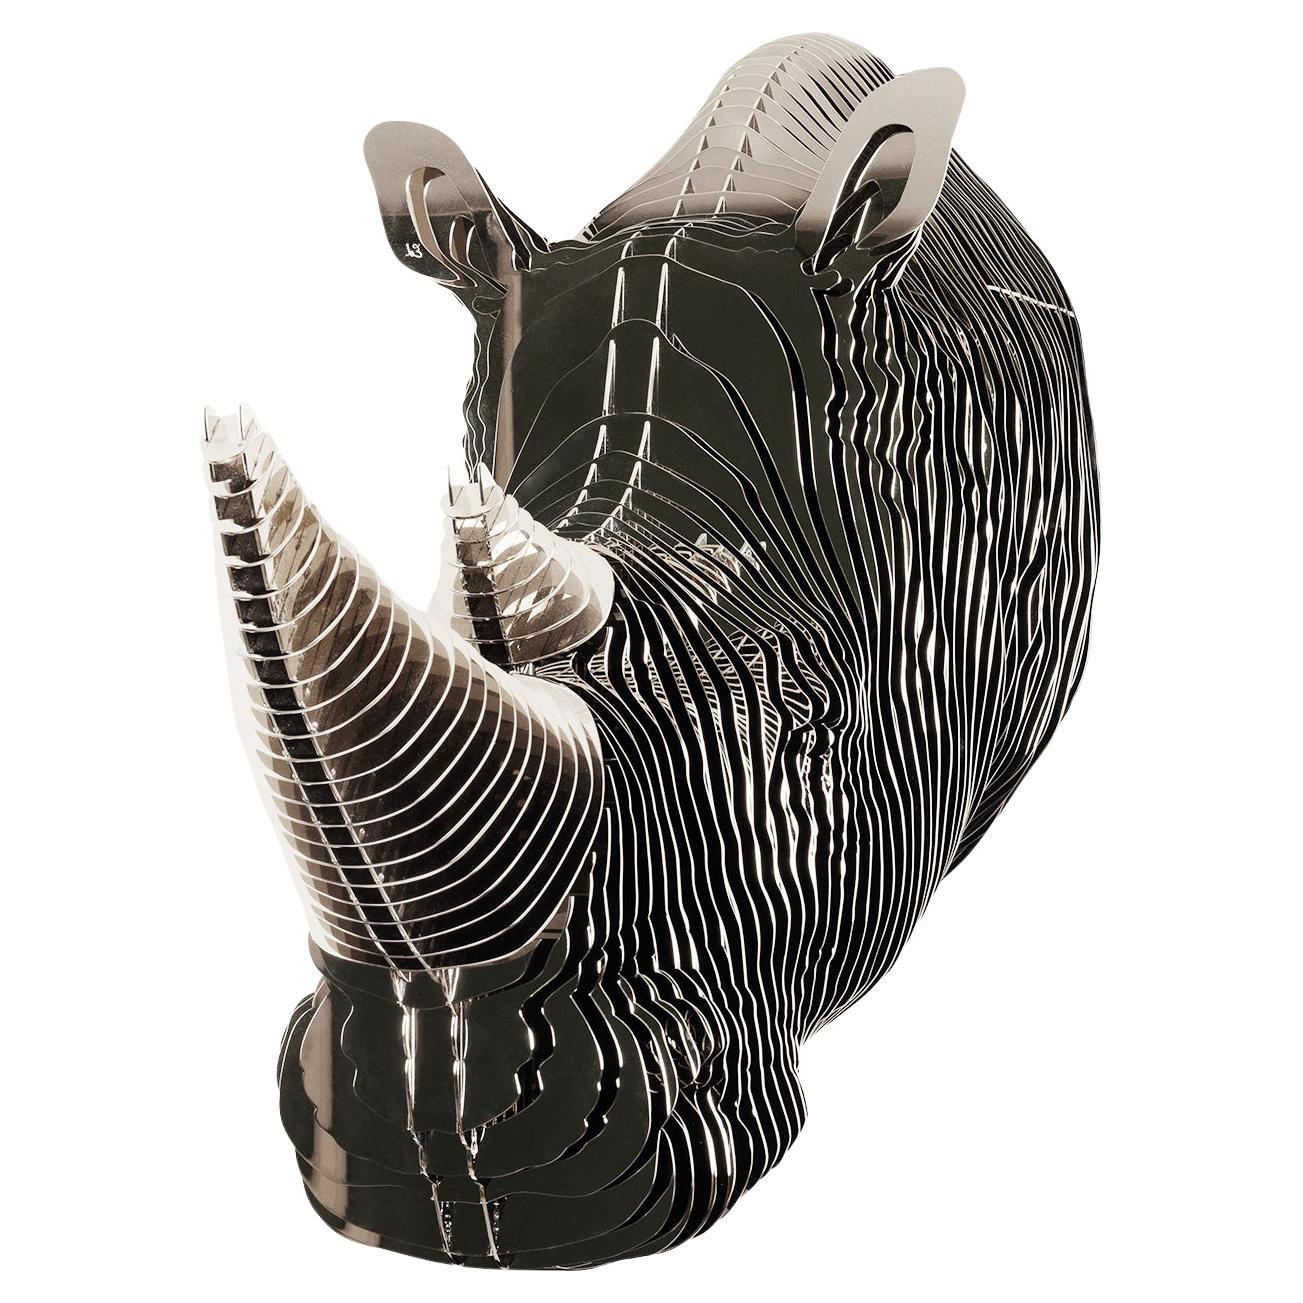 Rhino Trophee Sculpture